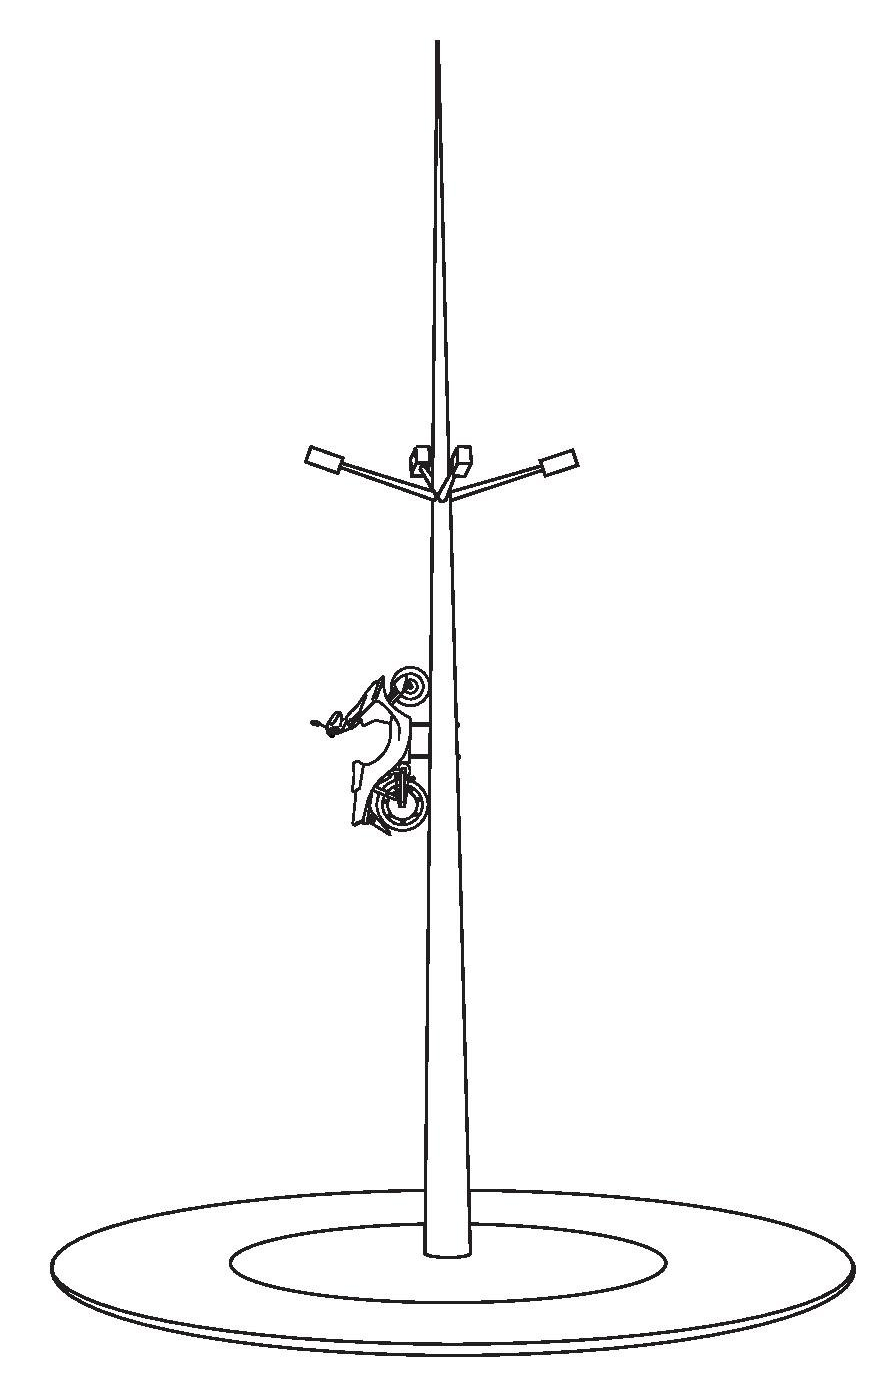 Mobilec on a pole